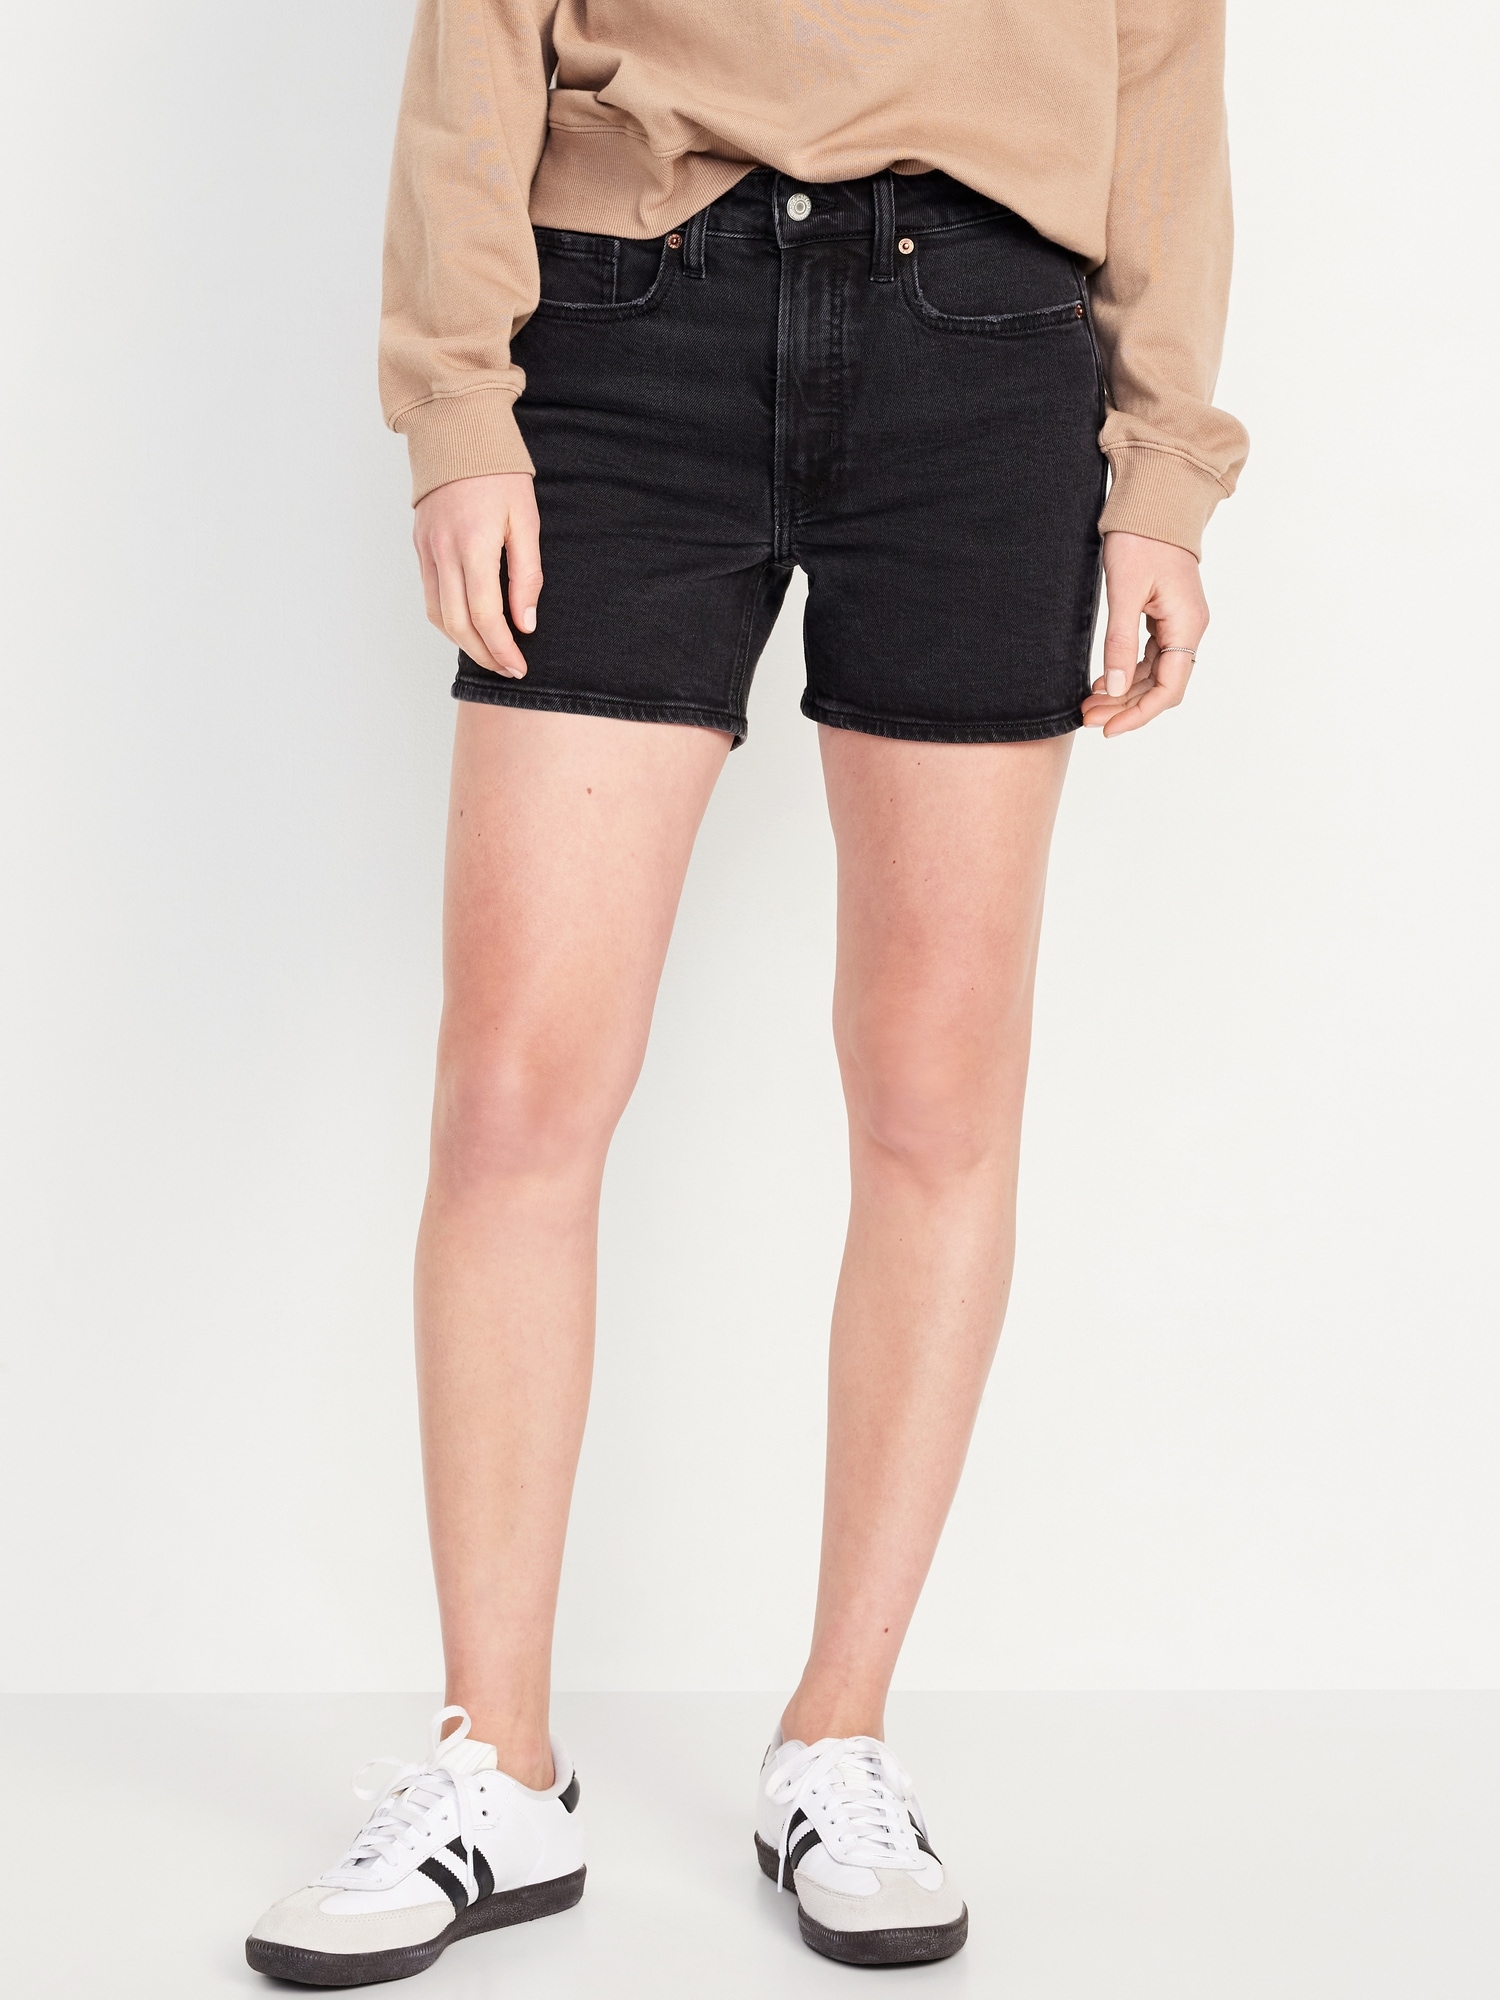 High-Waisted OG Jean Shorts -- 5-inch inseam Hot Deal